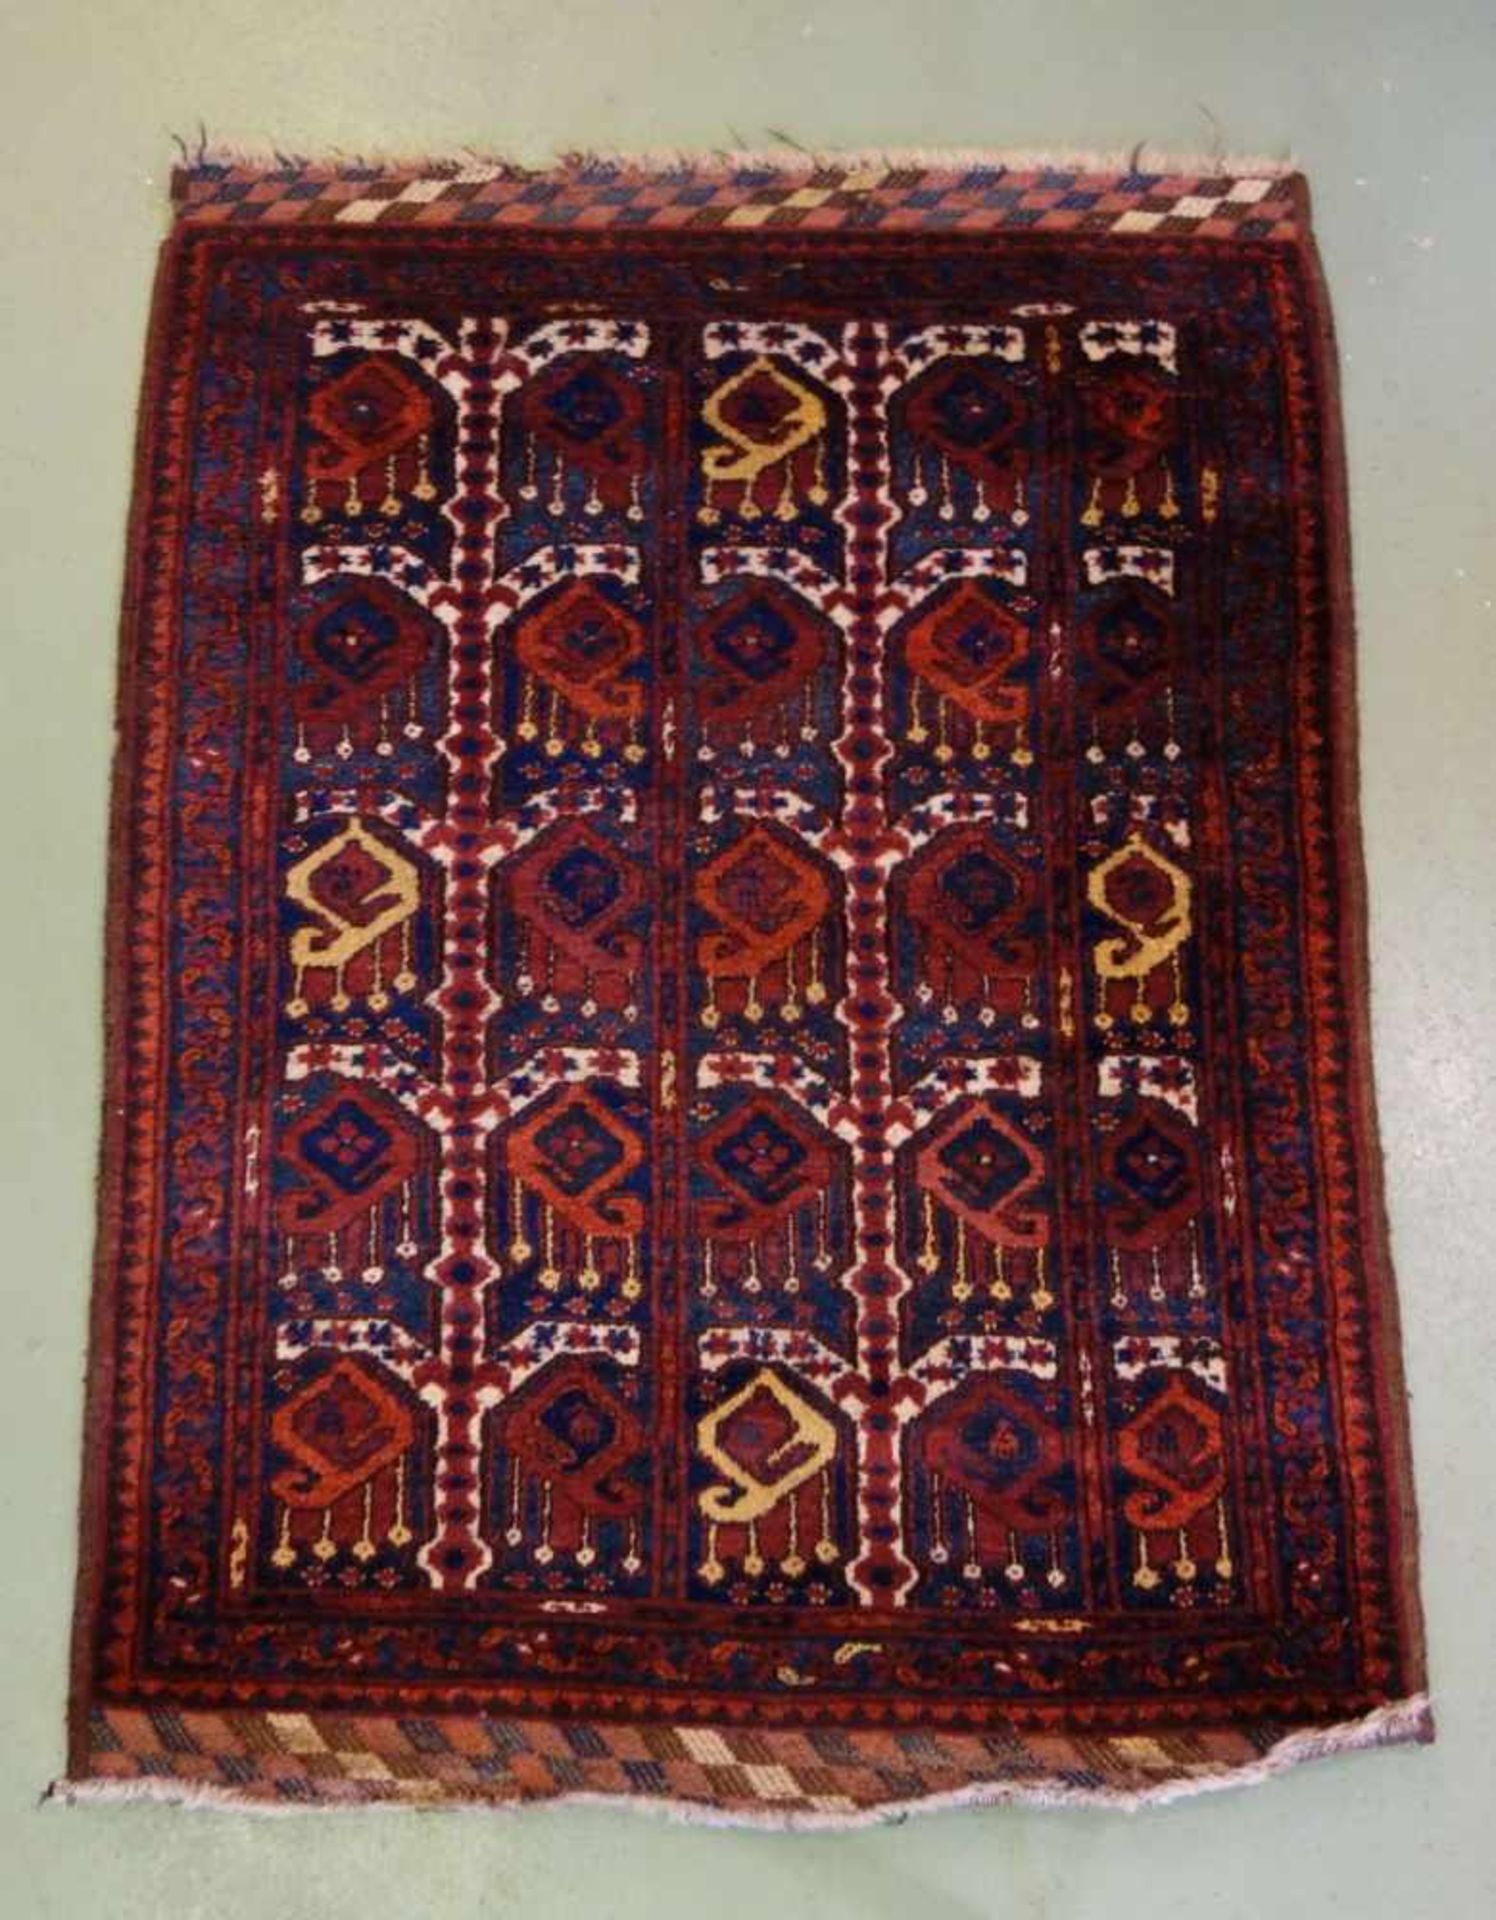 BESCHIR (ERSARI BESCHIR) / KLEINER TEPPICH / carpet / Zentralasien oder Südturkestan, wahrscheinlich